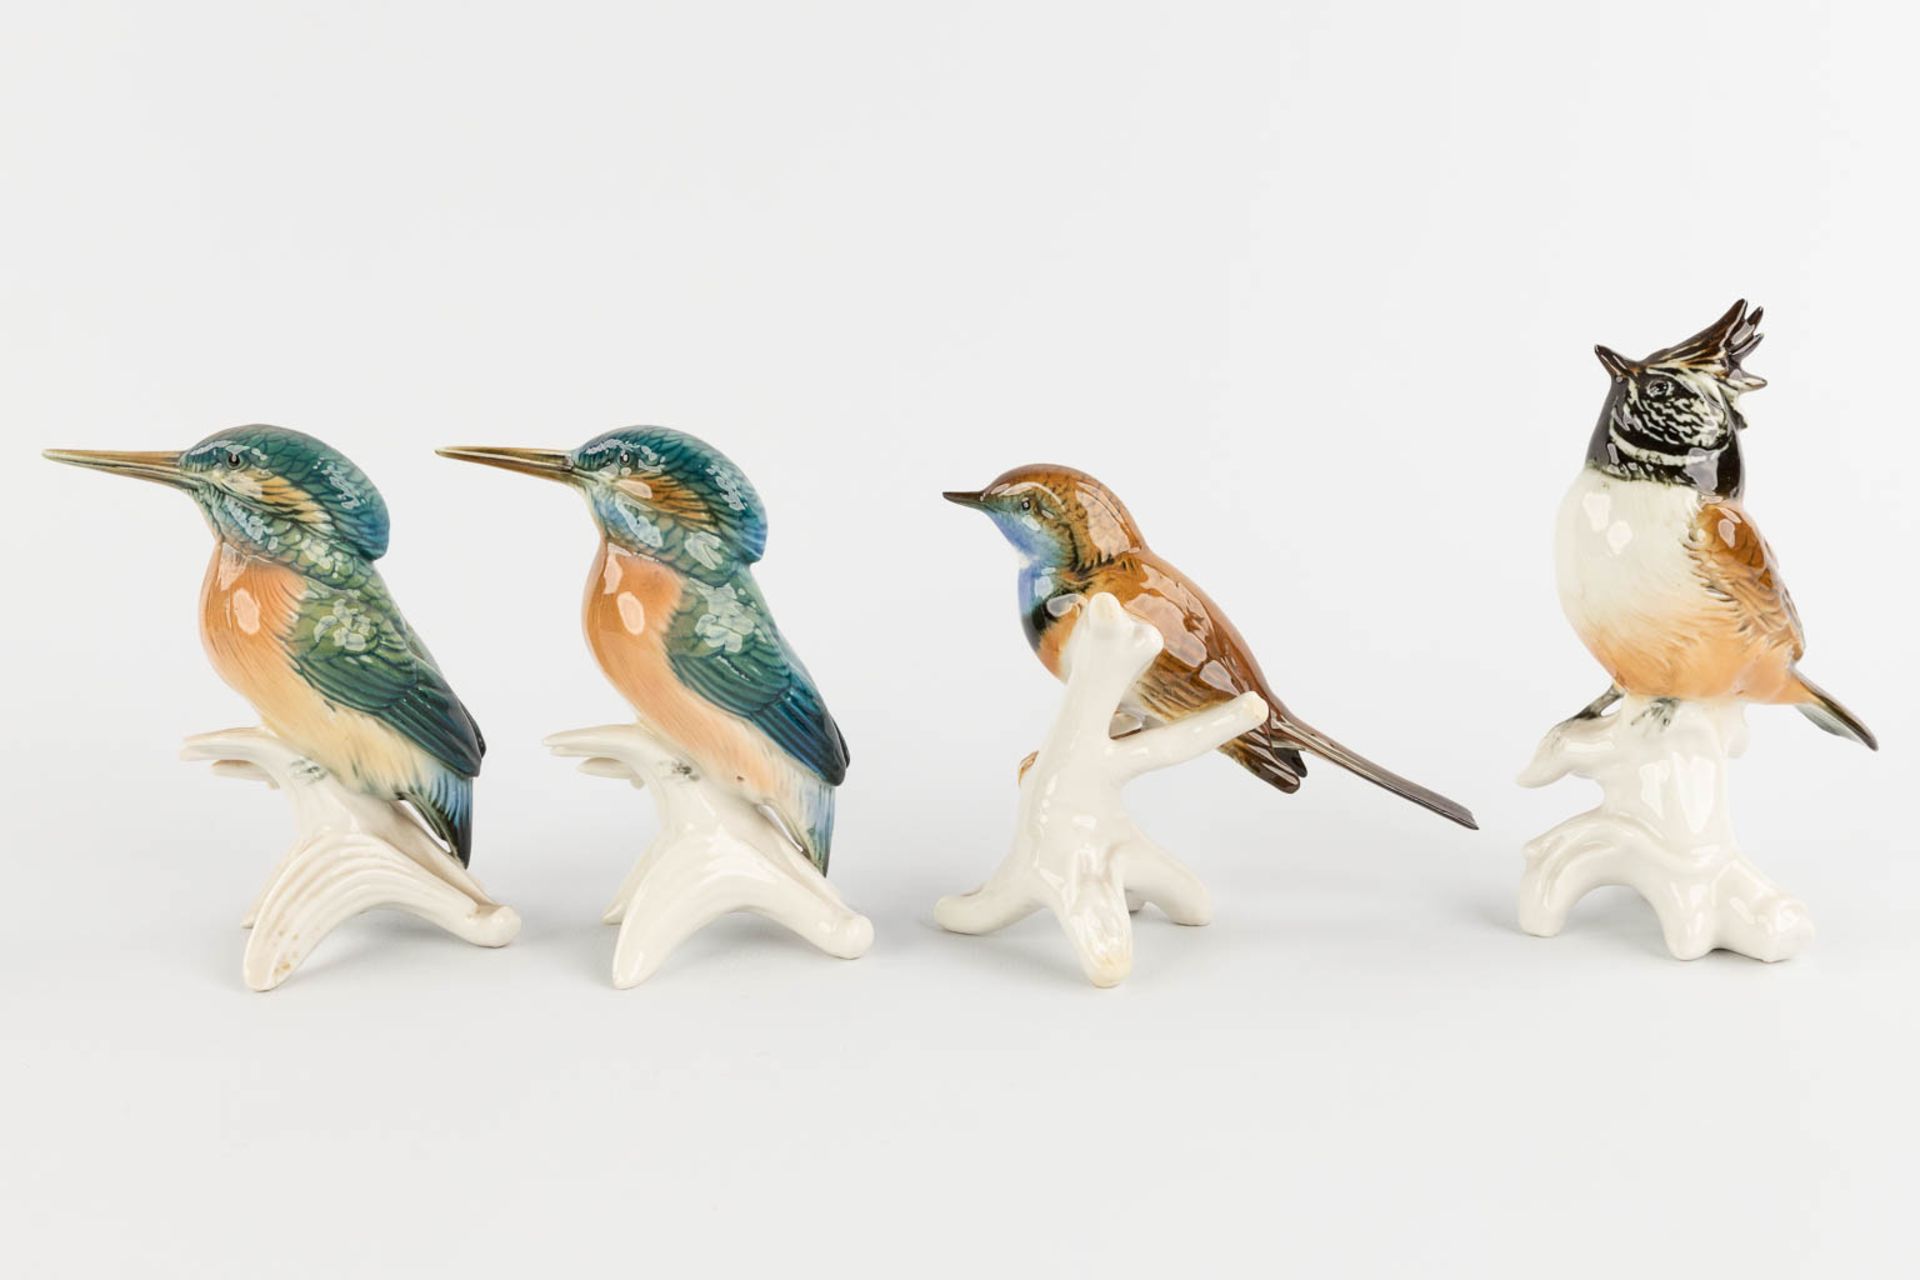 Karl ENS Porzellan, 8 birds, polychrome porcelain. 20th C. (H:19 cm) - Image 12 of 15